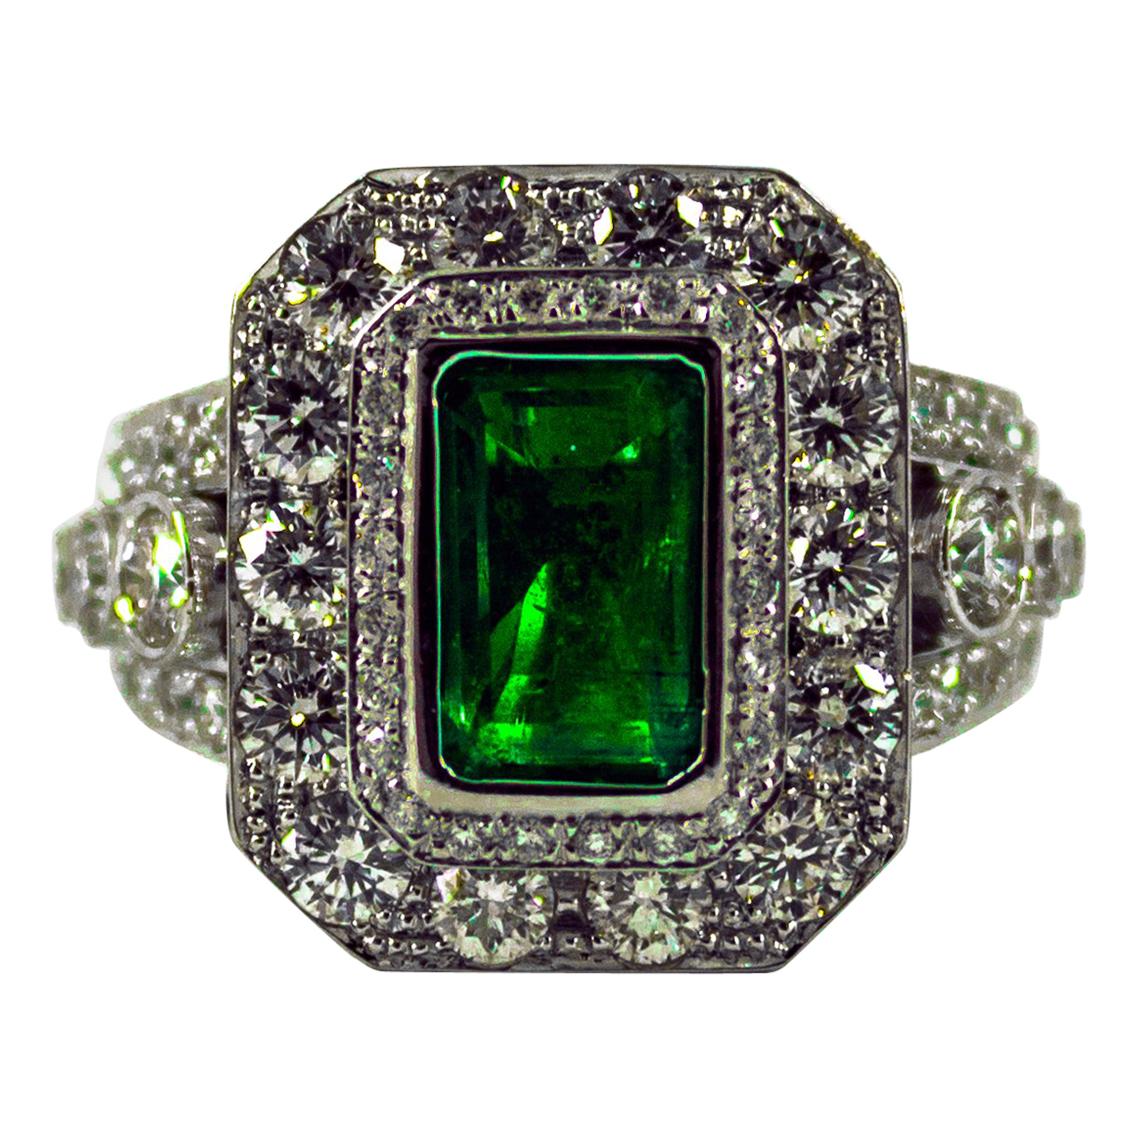 Art Deco 3.05 Carat Emerald 3.52 Carat White Diamond White Gold Cocktail Ring